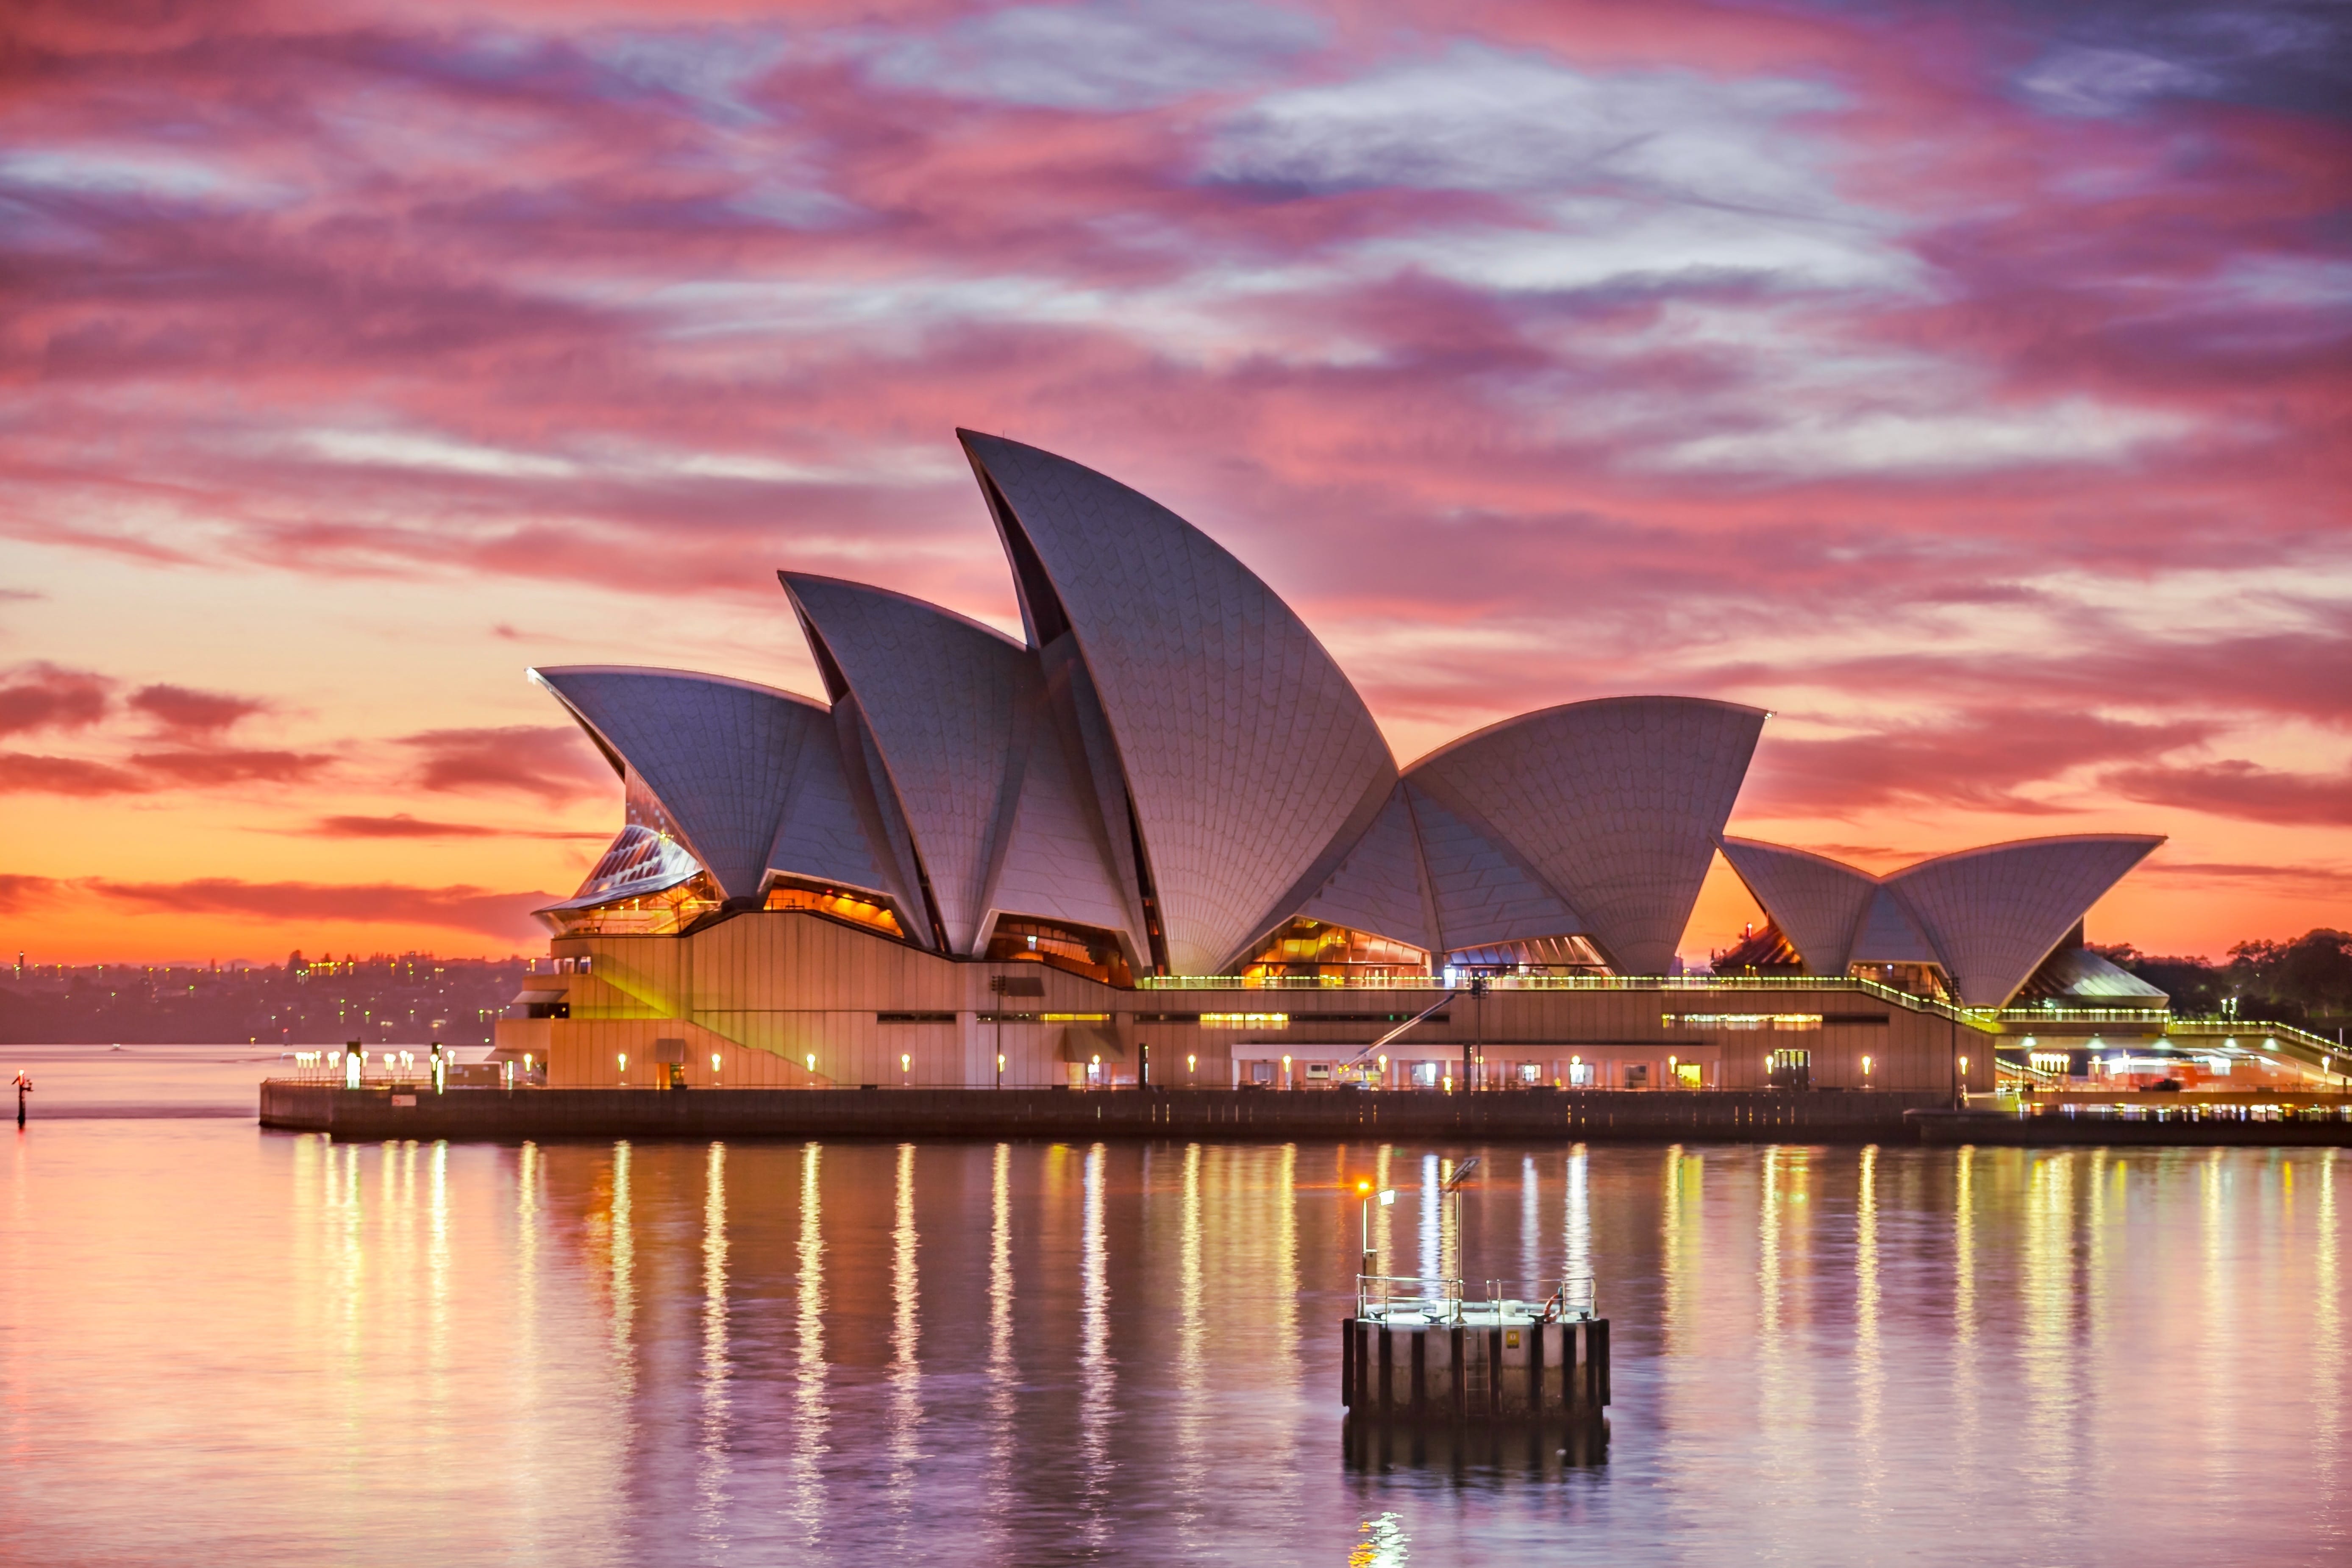 Sydney Opera House in Sydney, Australia, at sunset; image by Keith Zhu, via Unsplash.com.